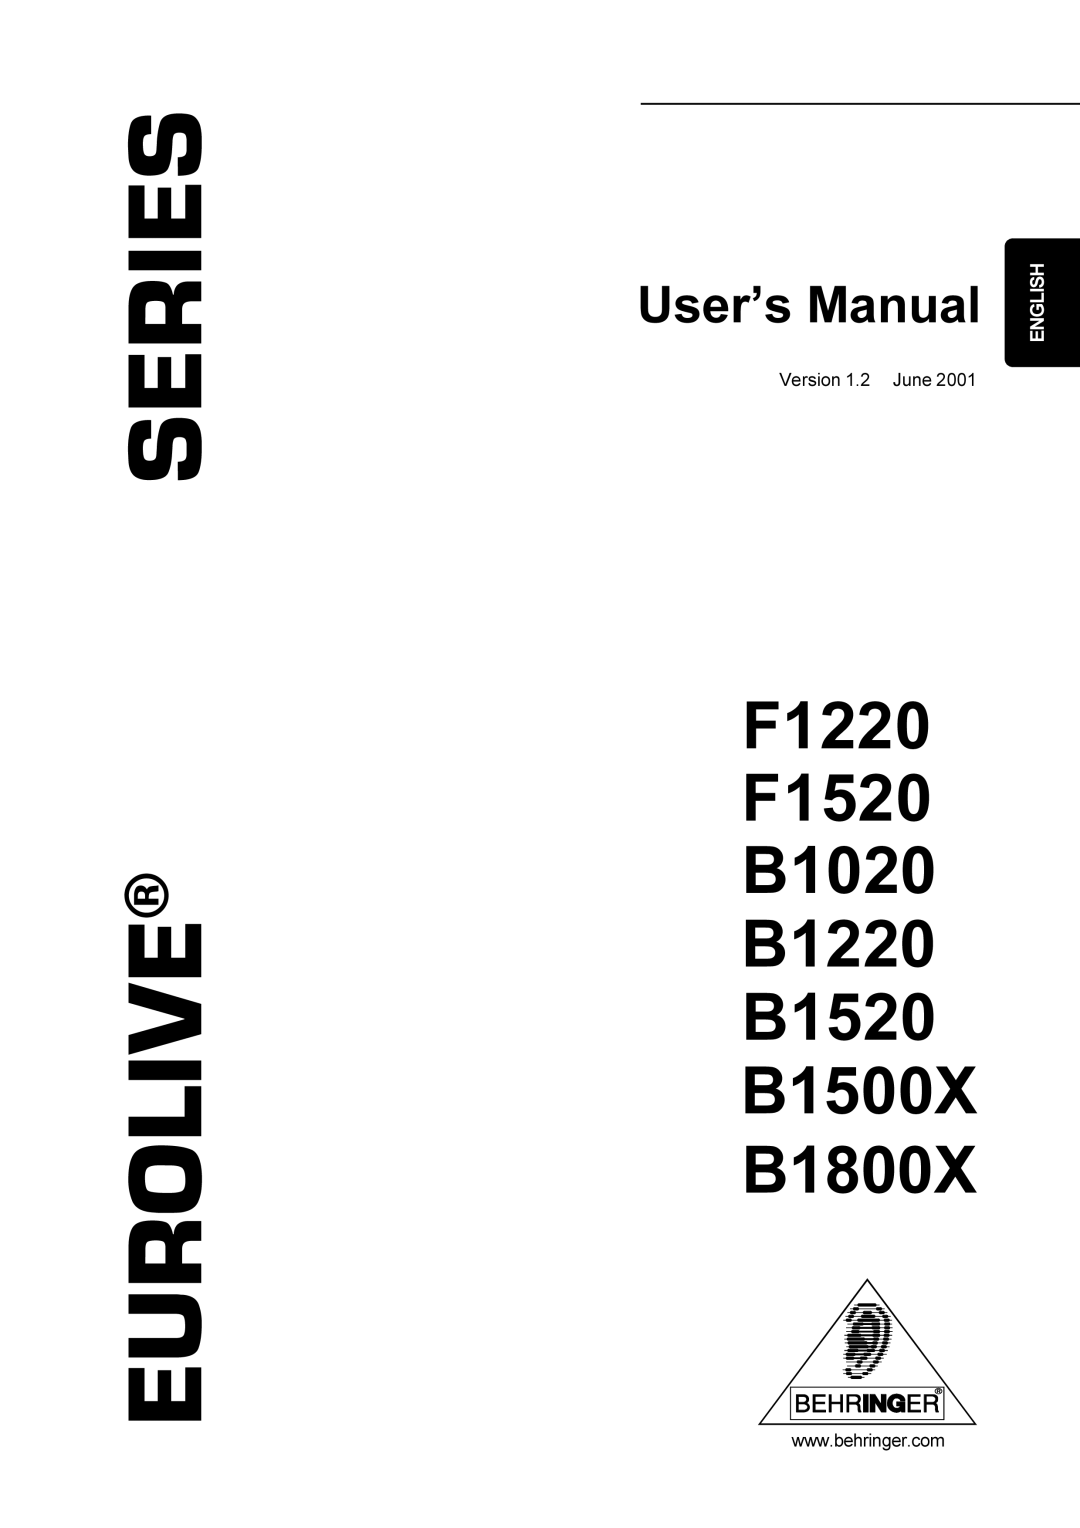 Behringer manual Series Eurolive, F1220 F1520 B1020 B1220 B1520 B1500X B1800X, English, Version 1.2 June 